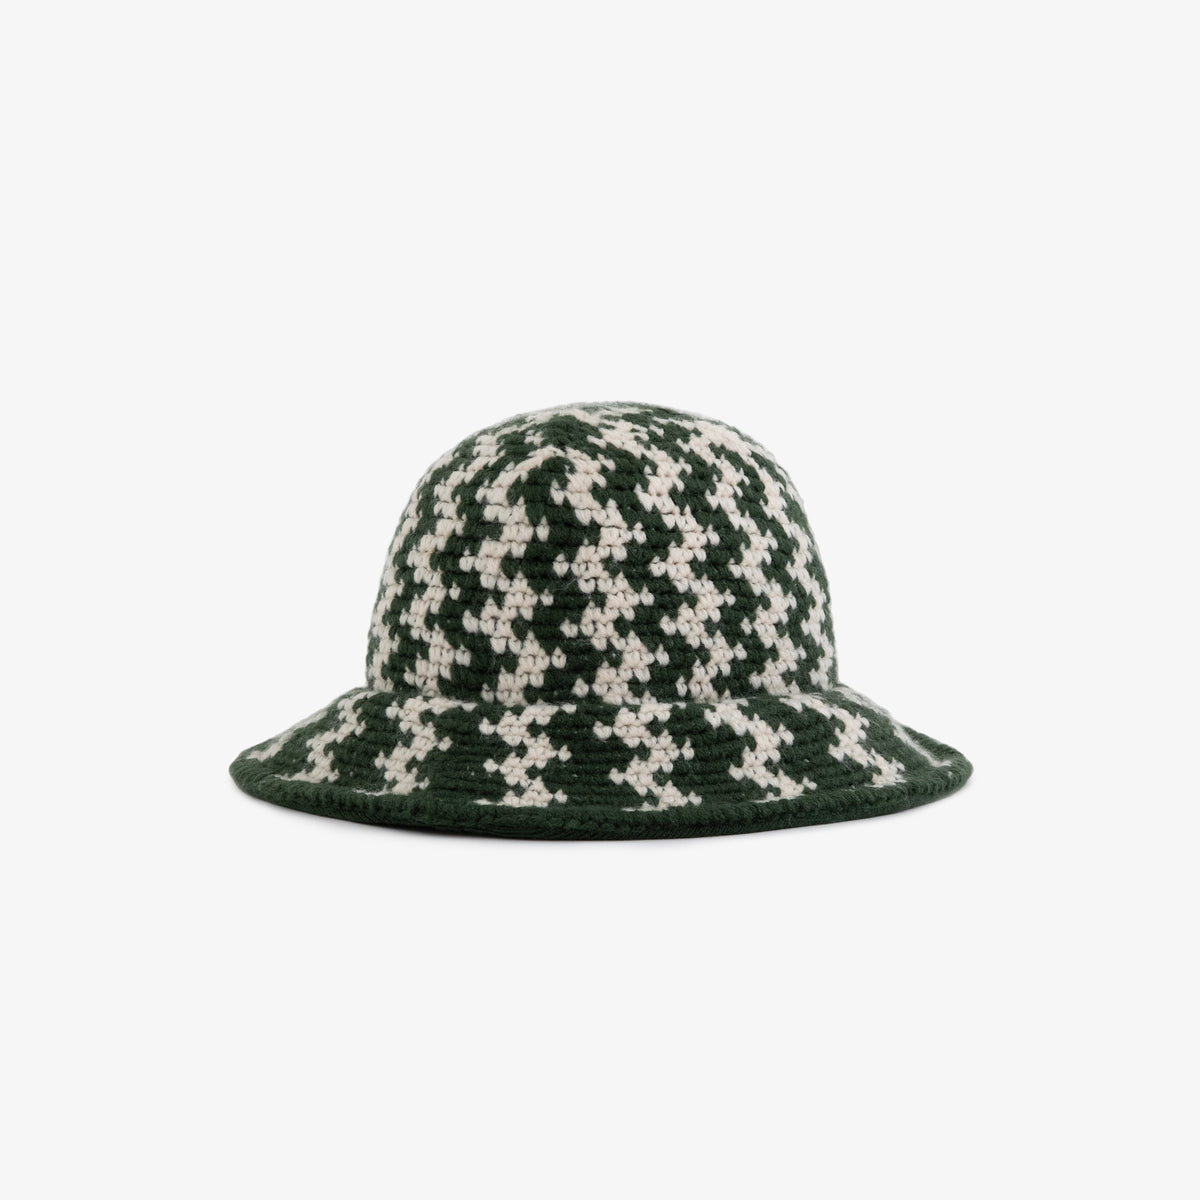 Crochet Bucket Hat at AimeLeonDore.com